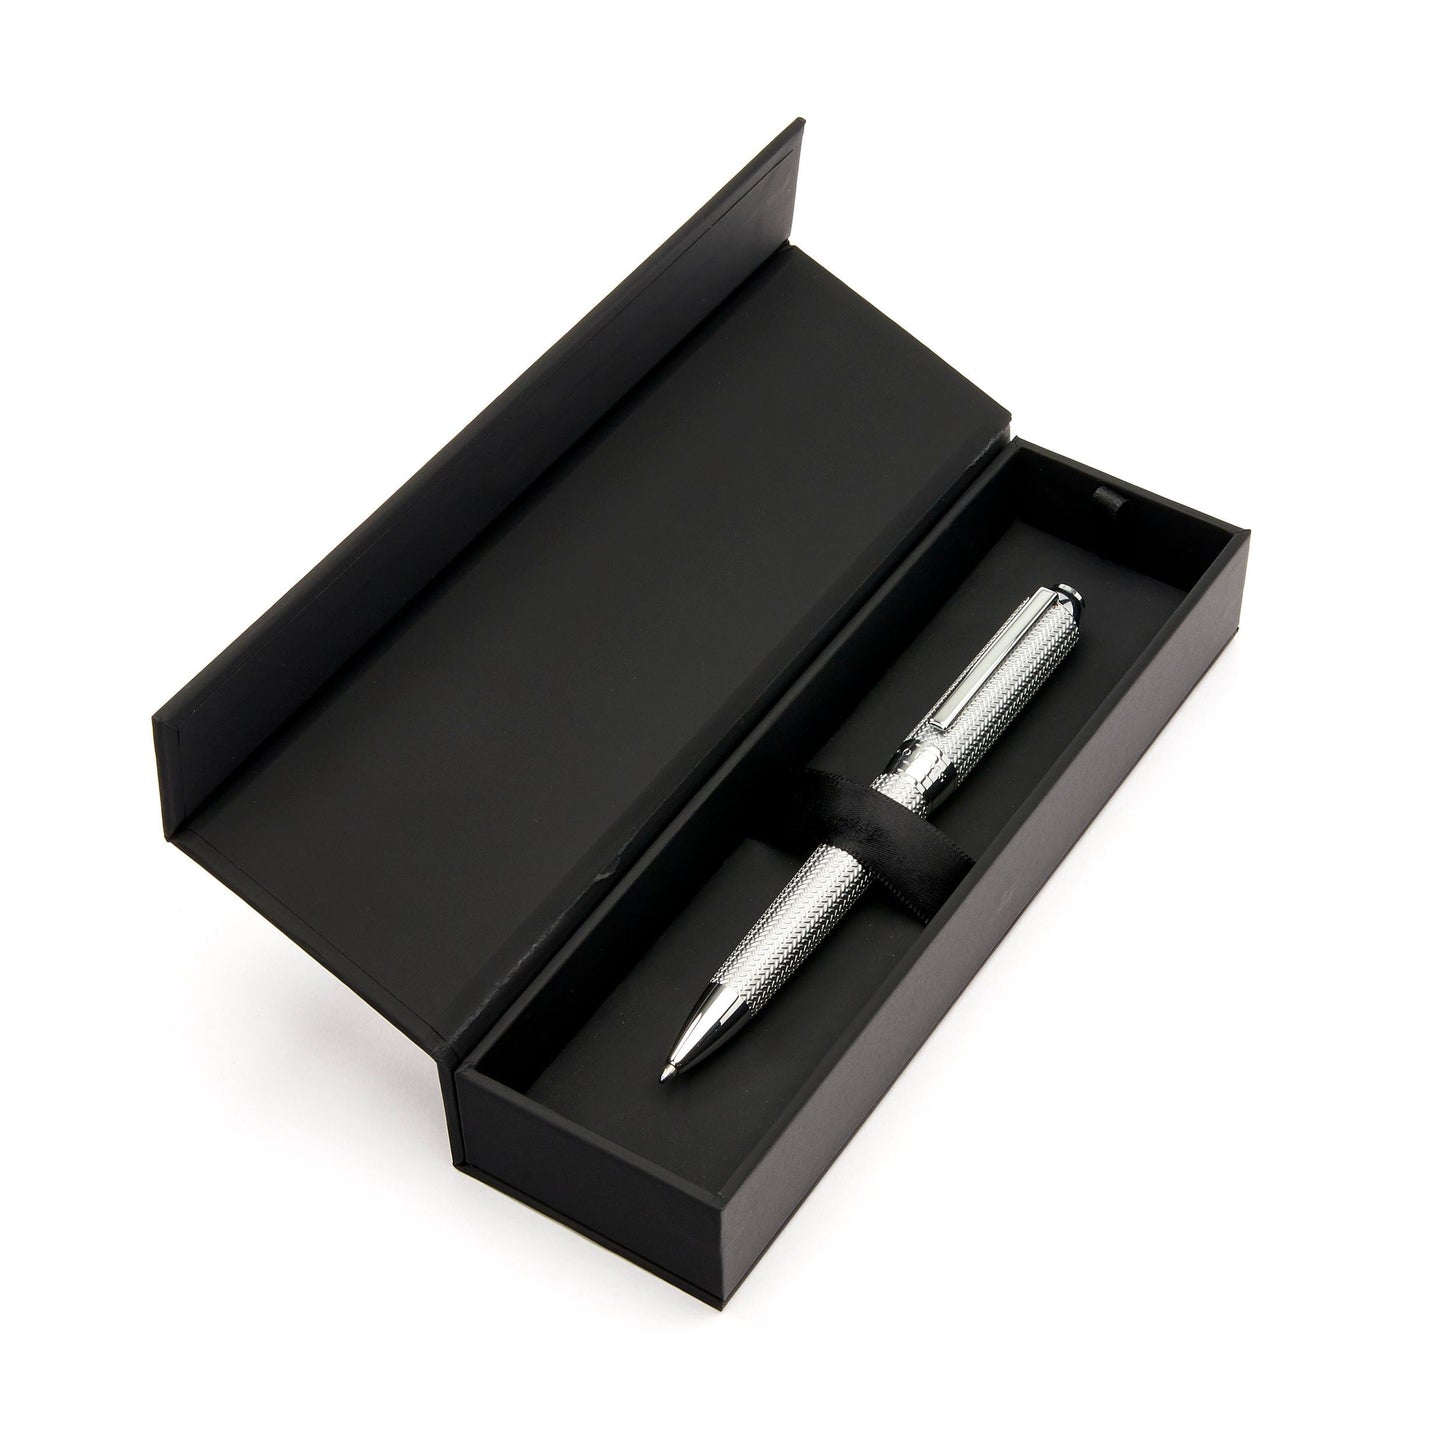 HUGO BOSS HSI4654C Στυλό Elemental Silver Ballpoint Pen